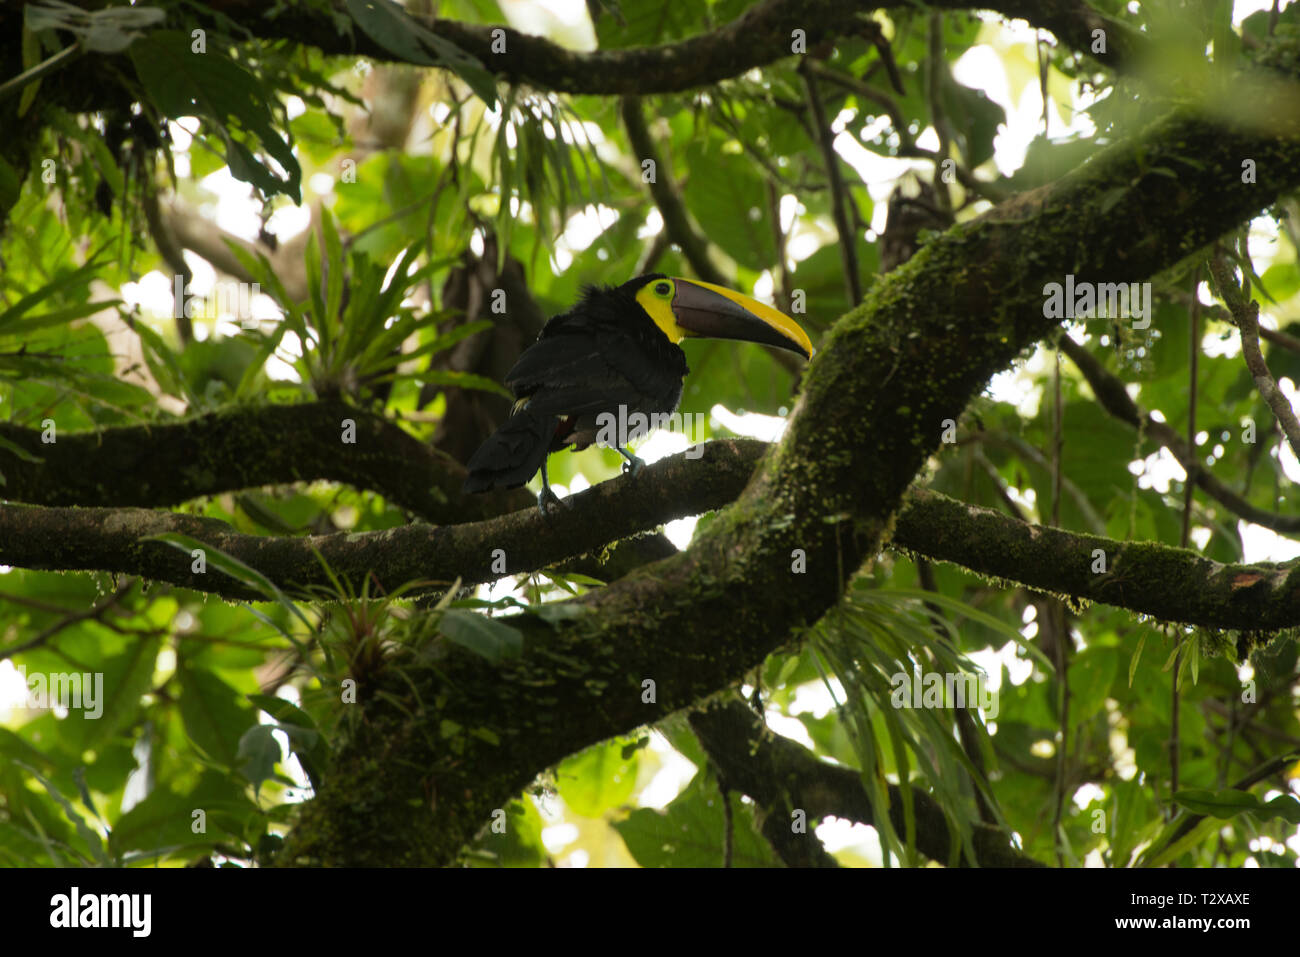 The rainforest of Costa Rica Stock Photo